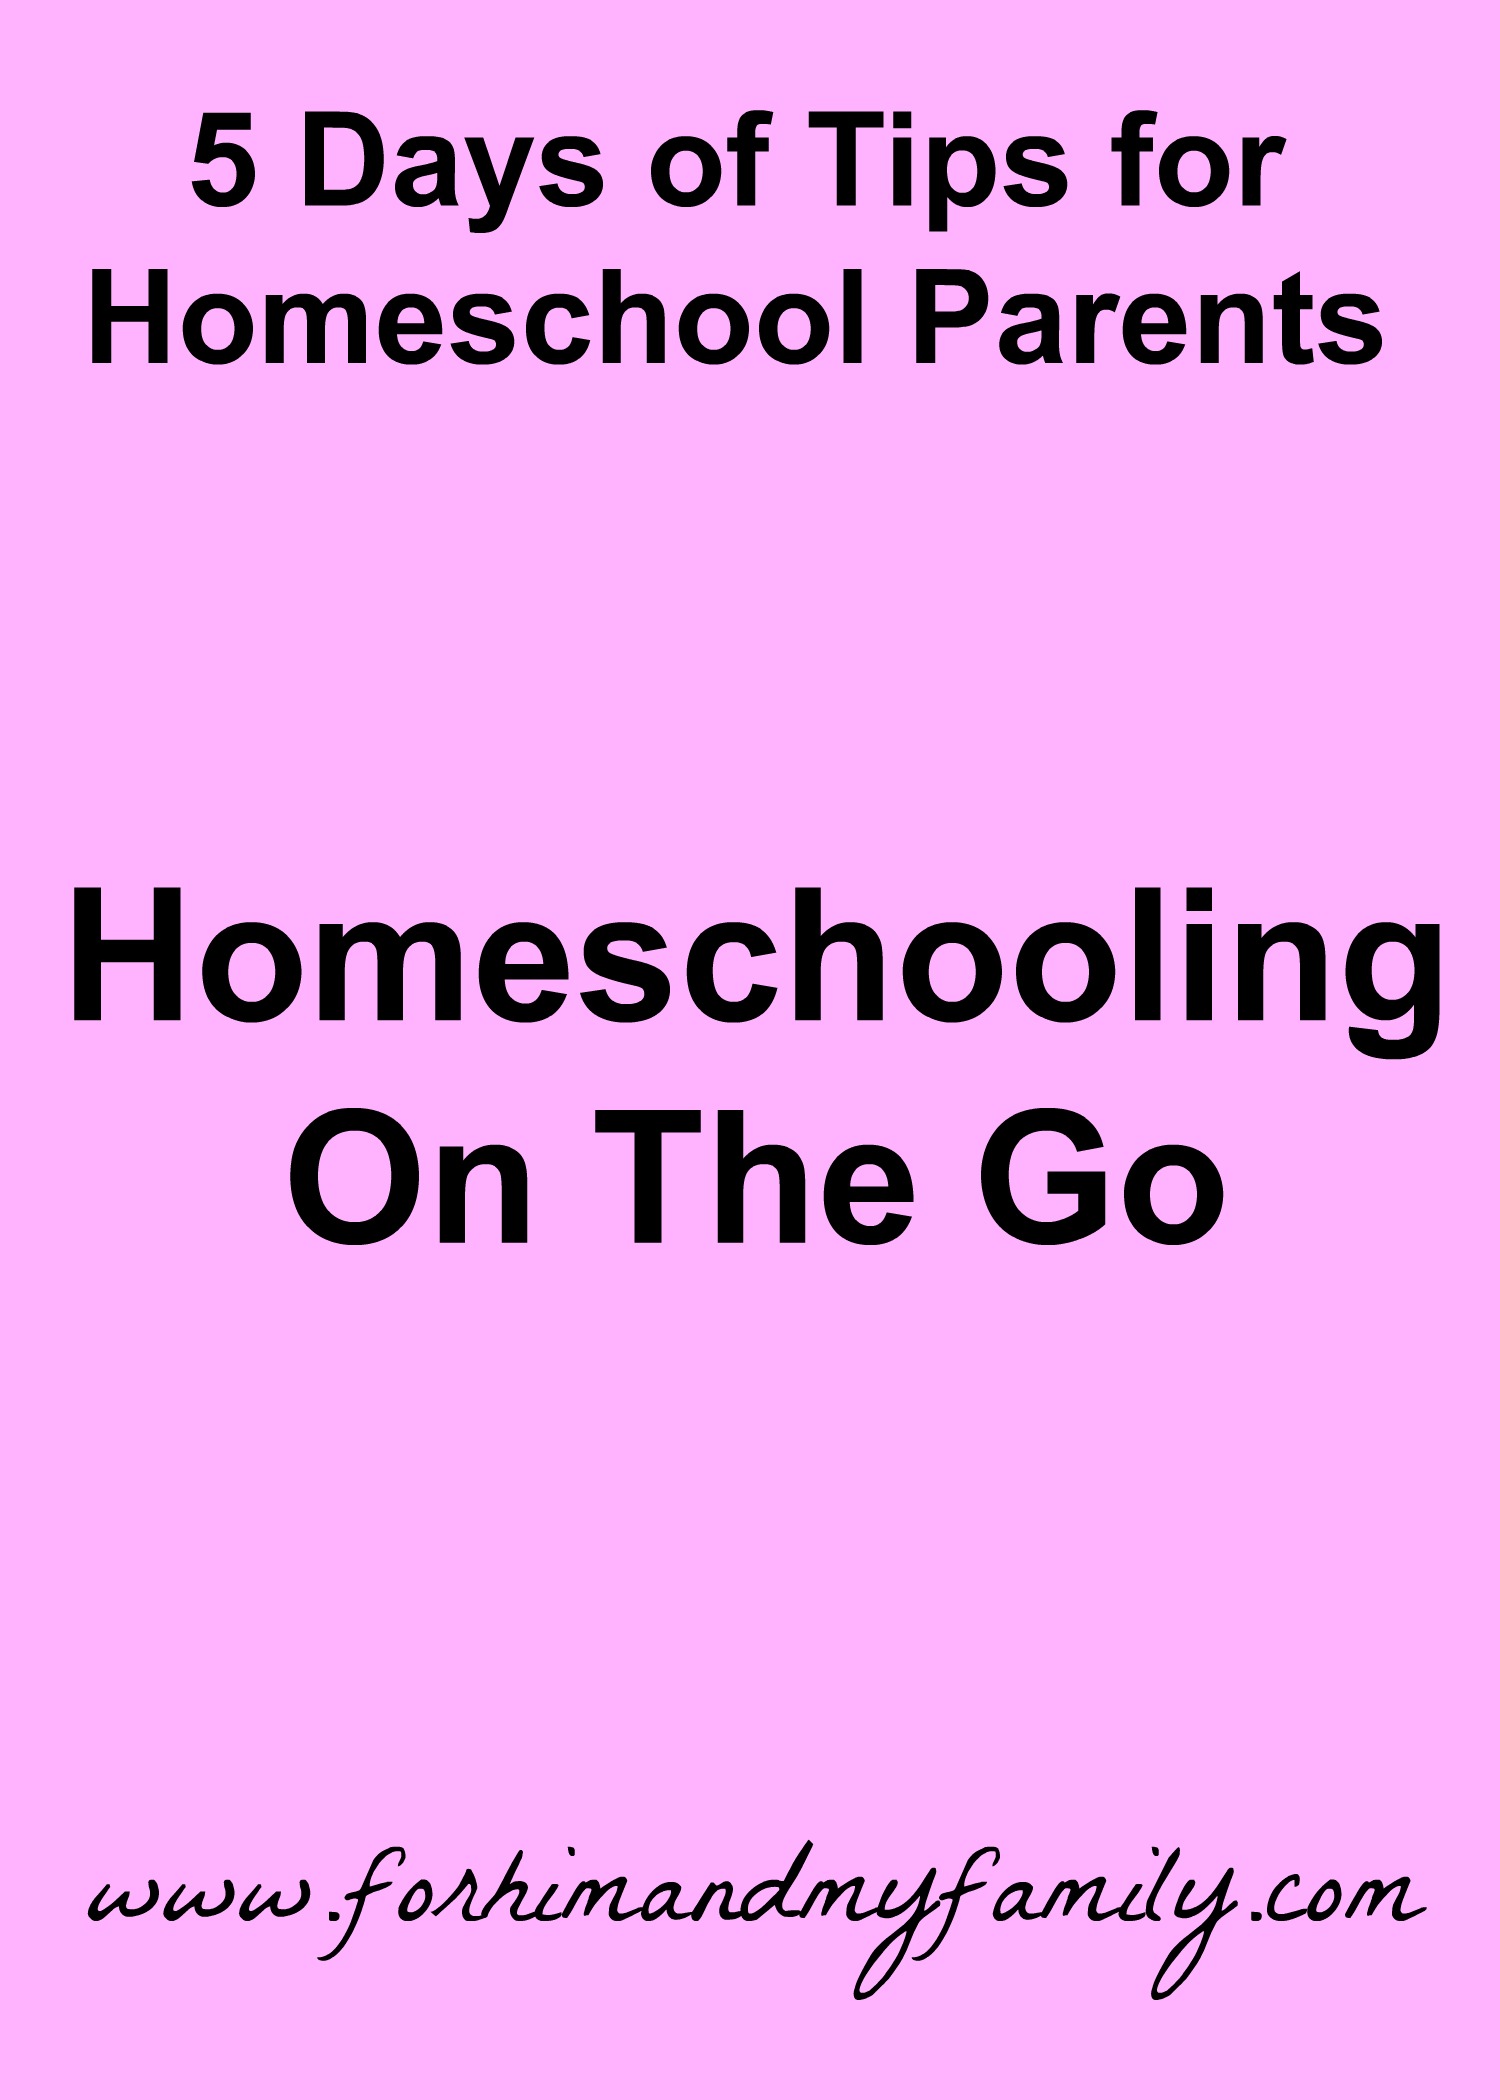 Homeschooling on the Go